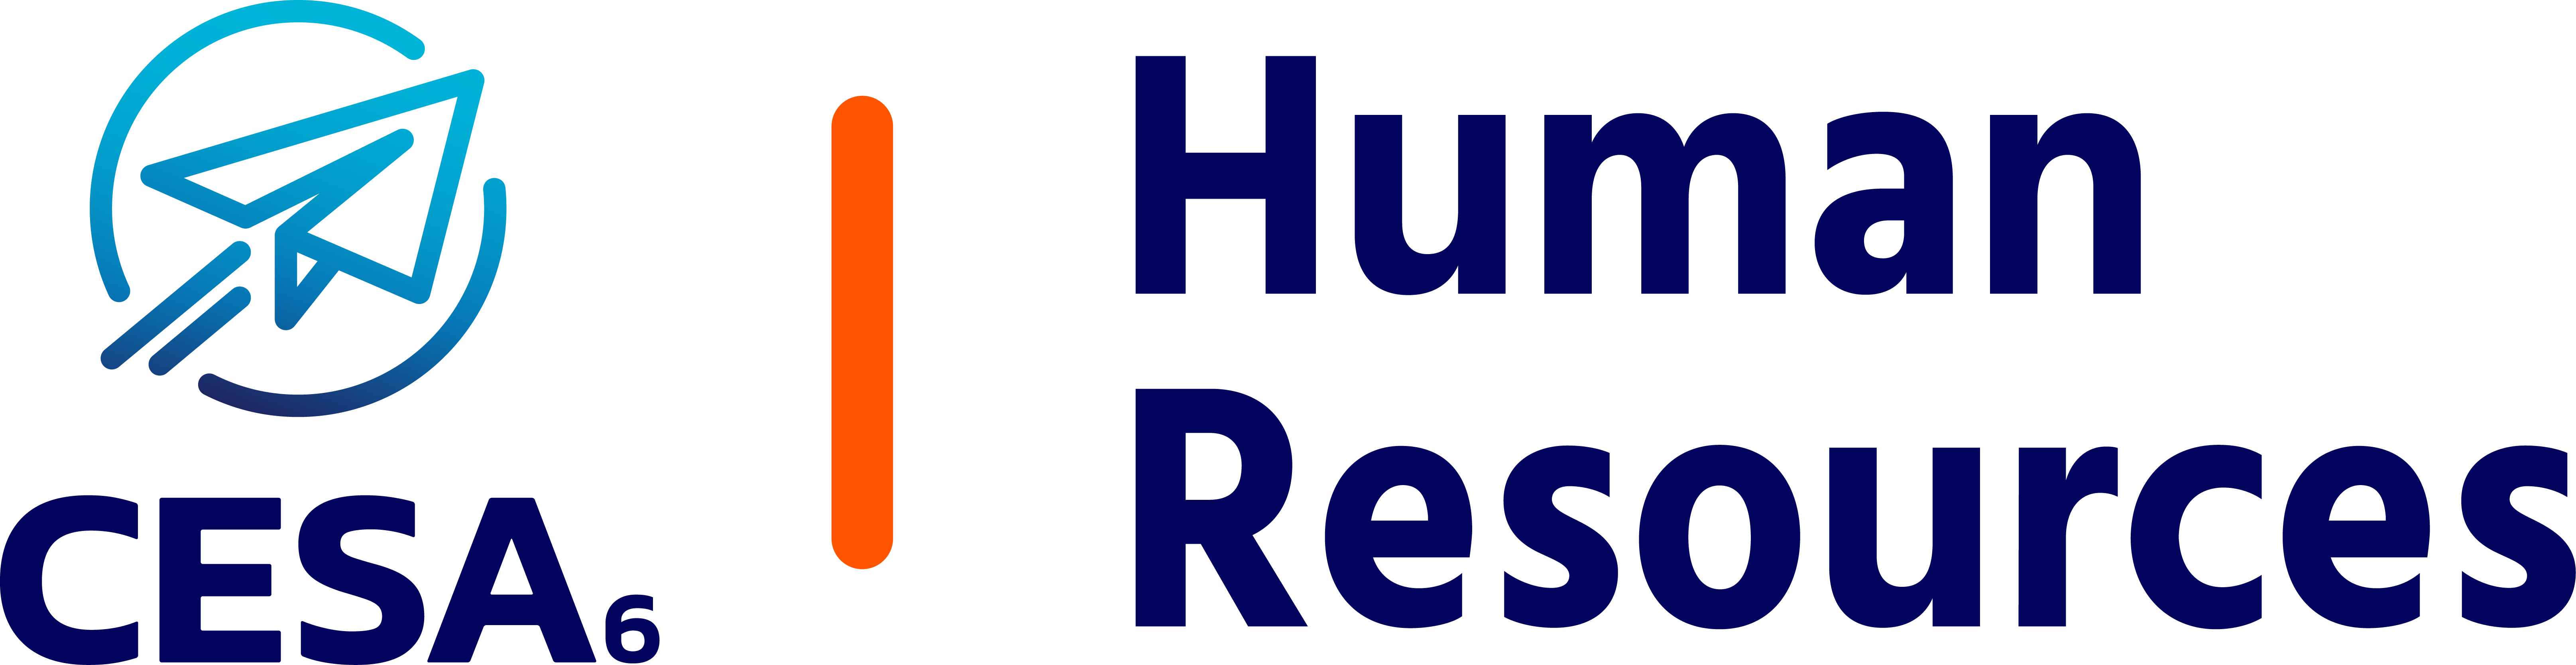 Human Resources Center